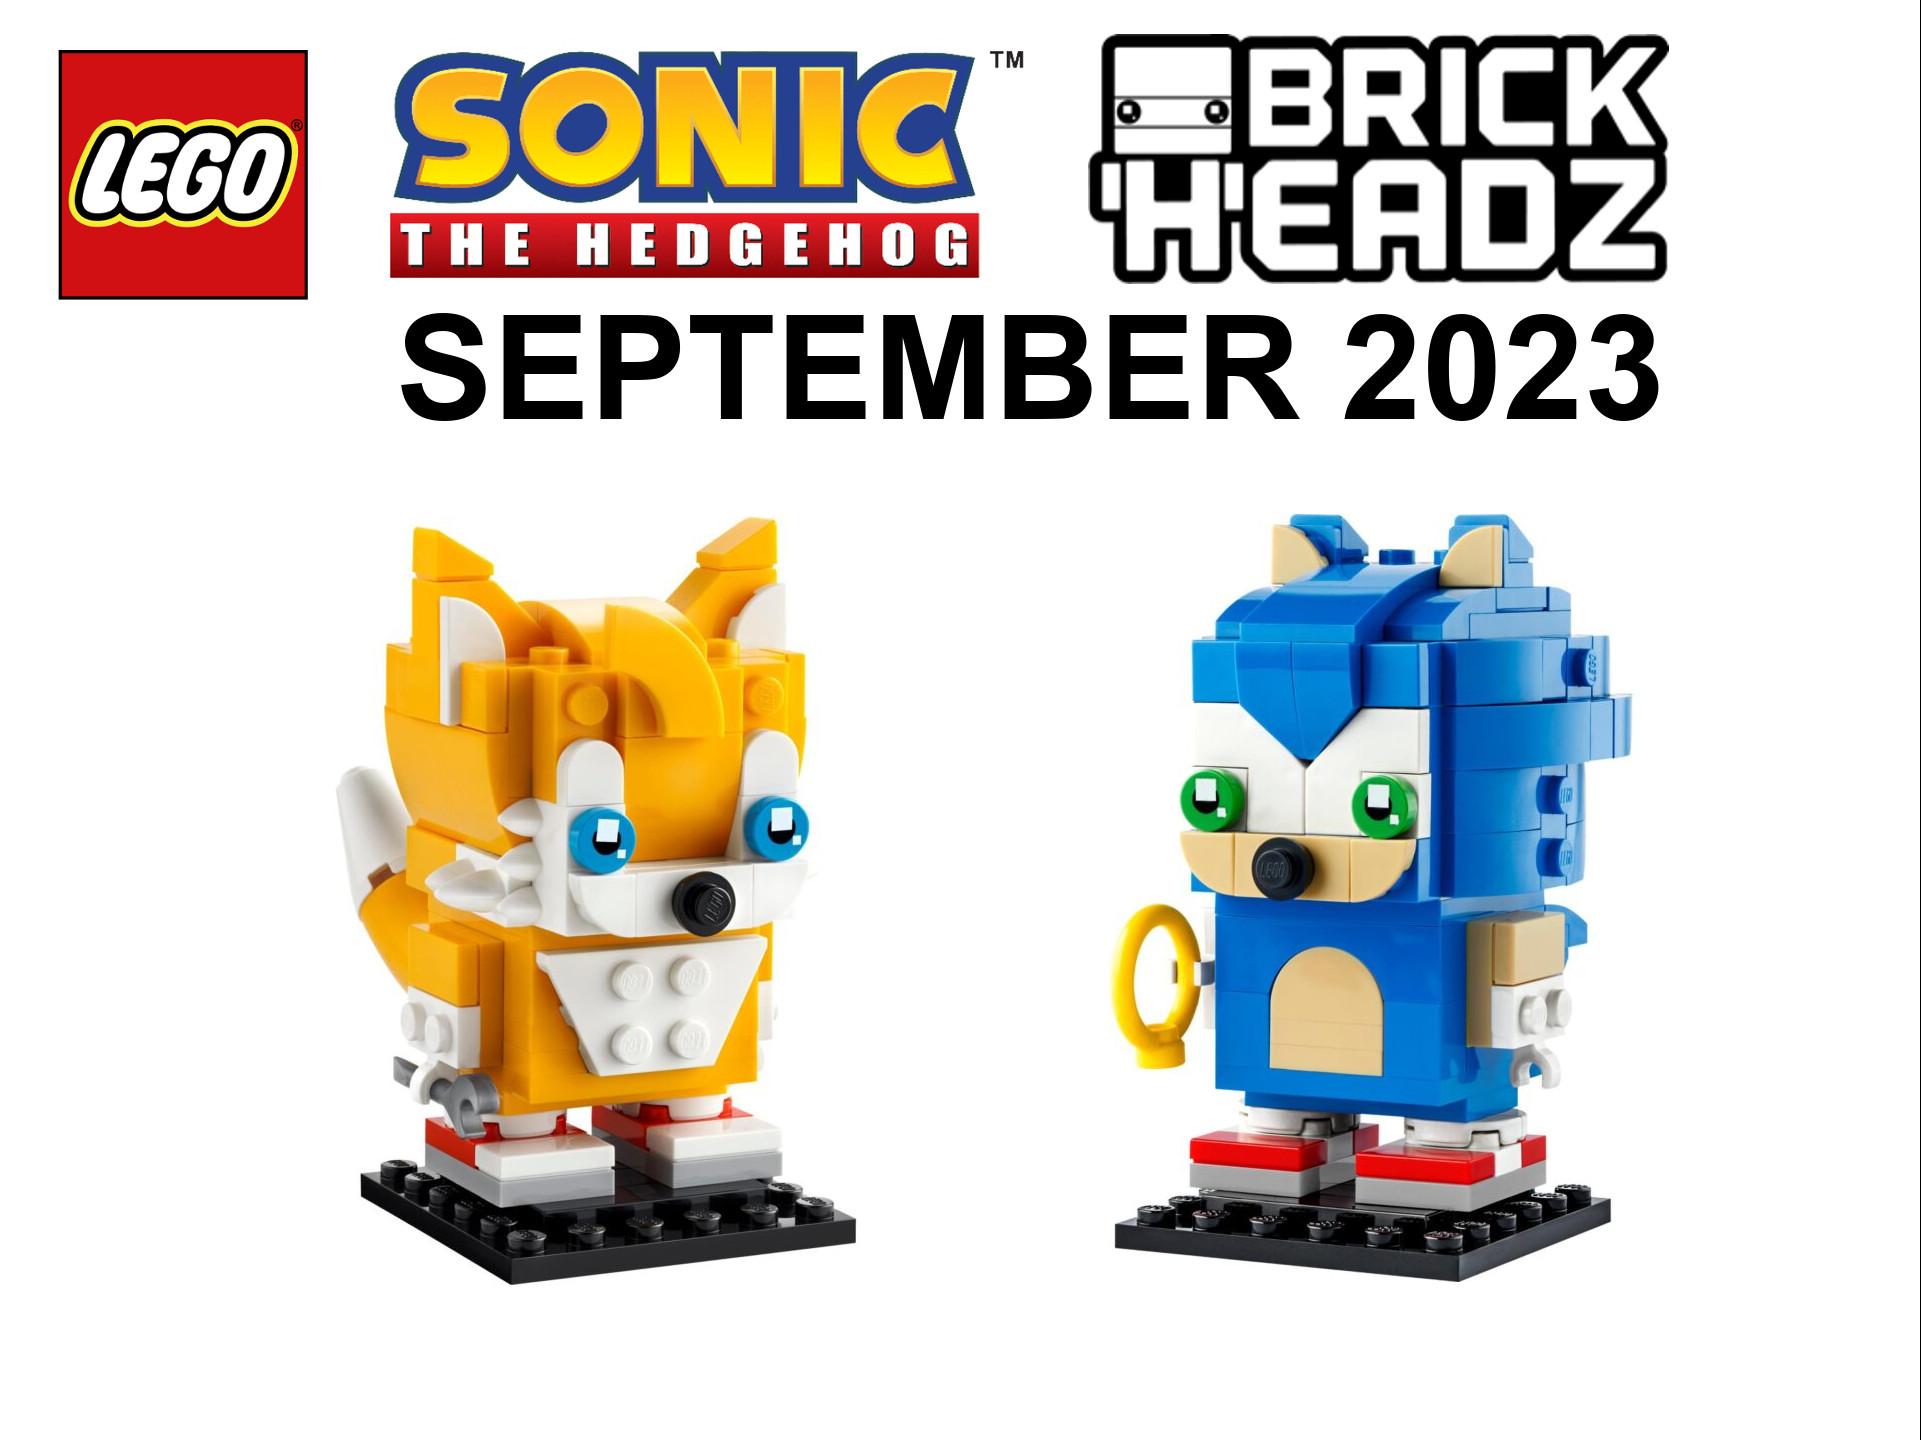 2 LEGO Sonic the Hedgehog Brickheadz Rumoured For September 2023